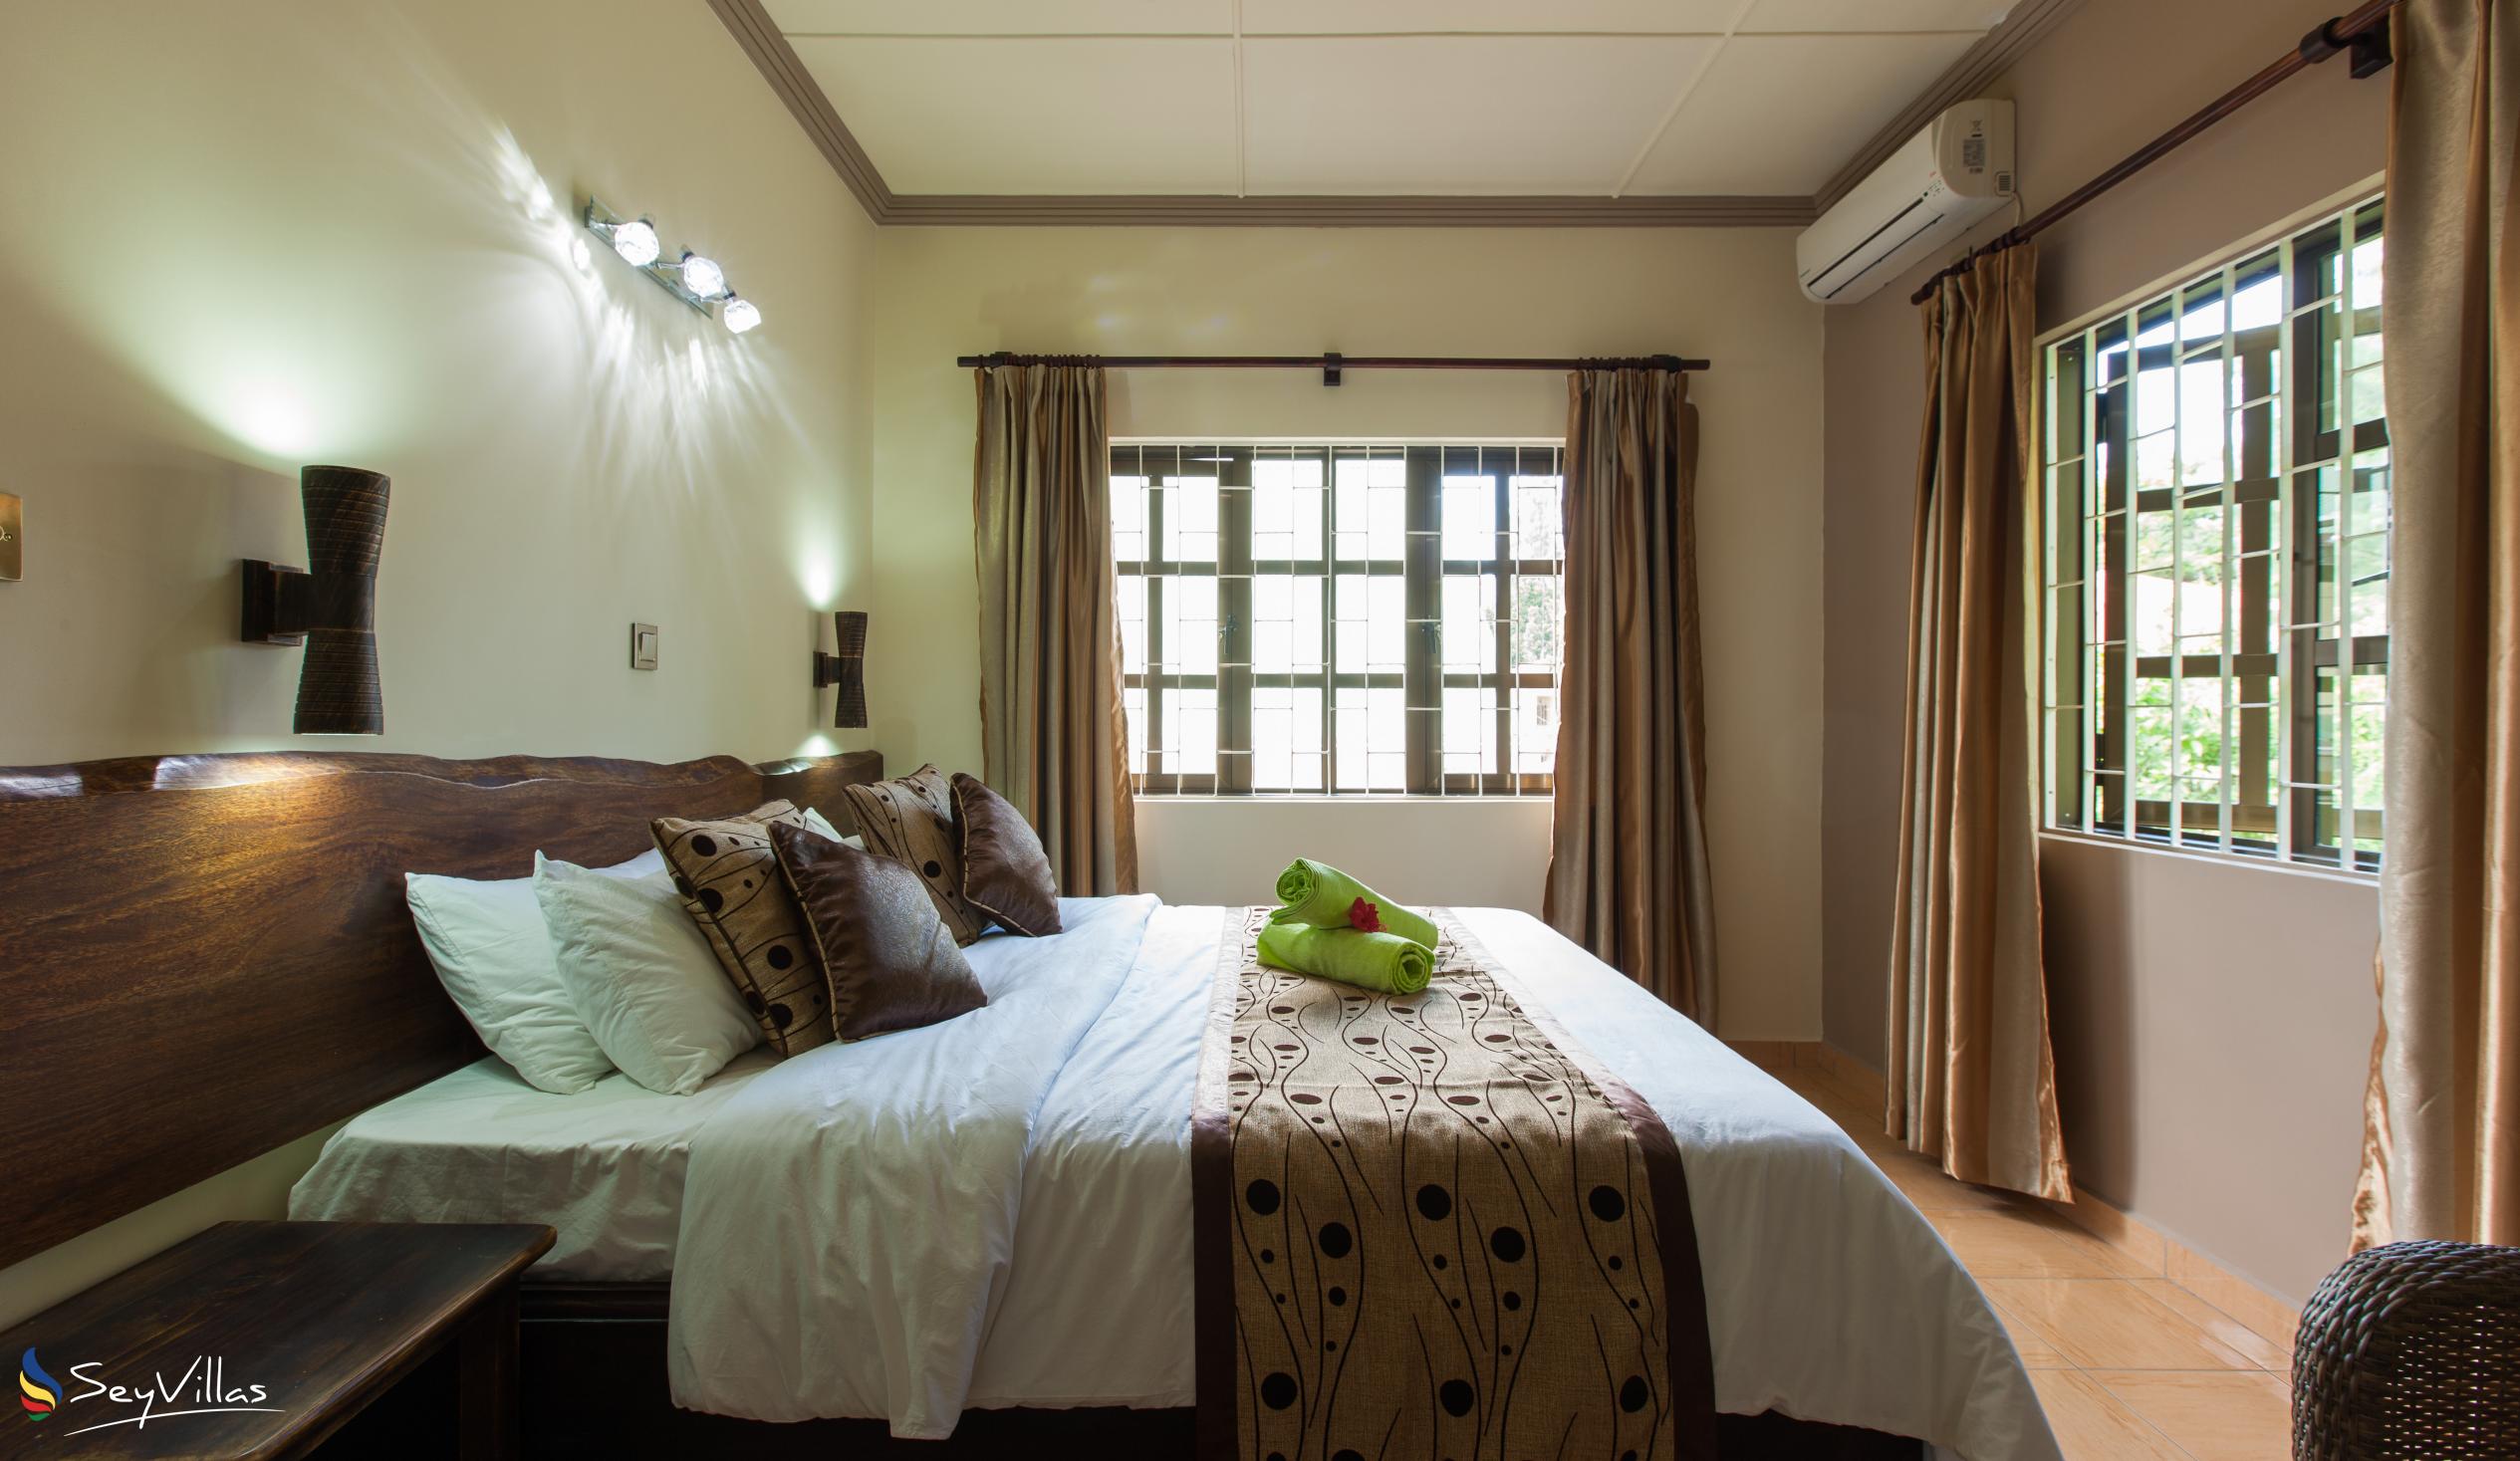 Foto 51: Chez Bea Villa - Appartement 2 chambres - Praslin (Seychelles)